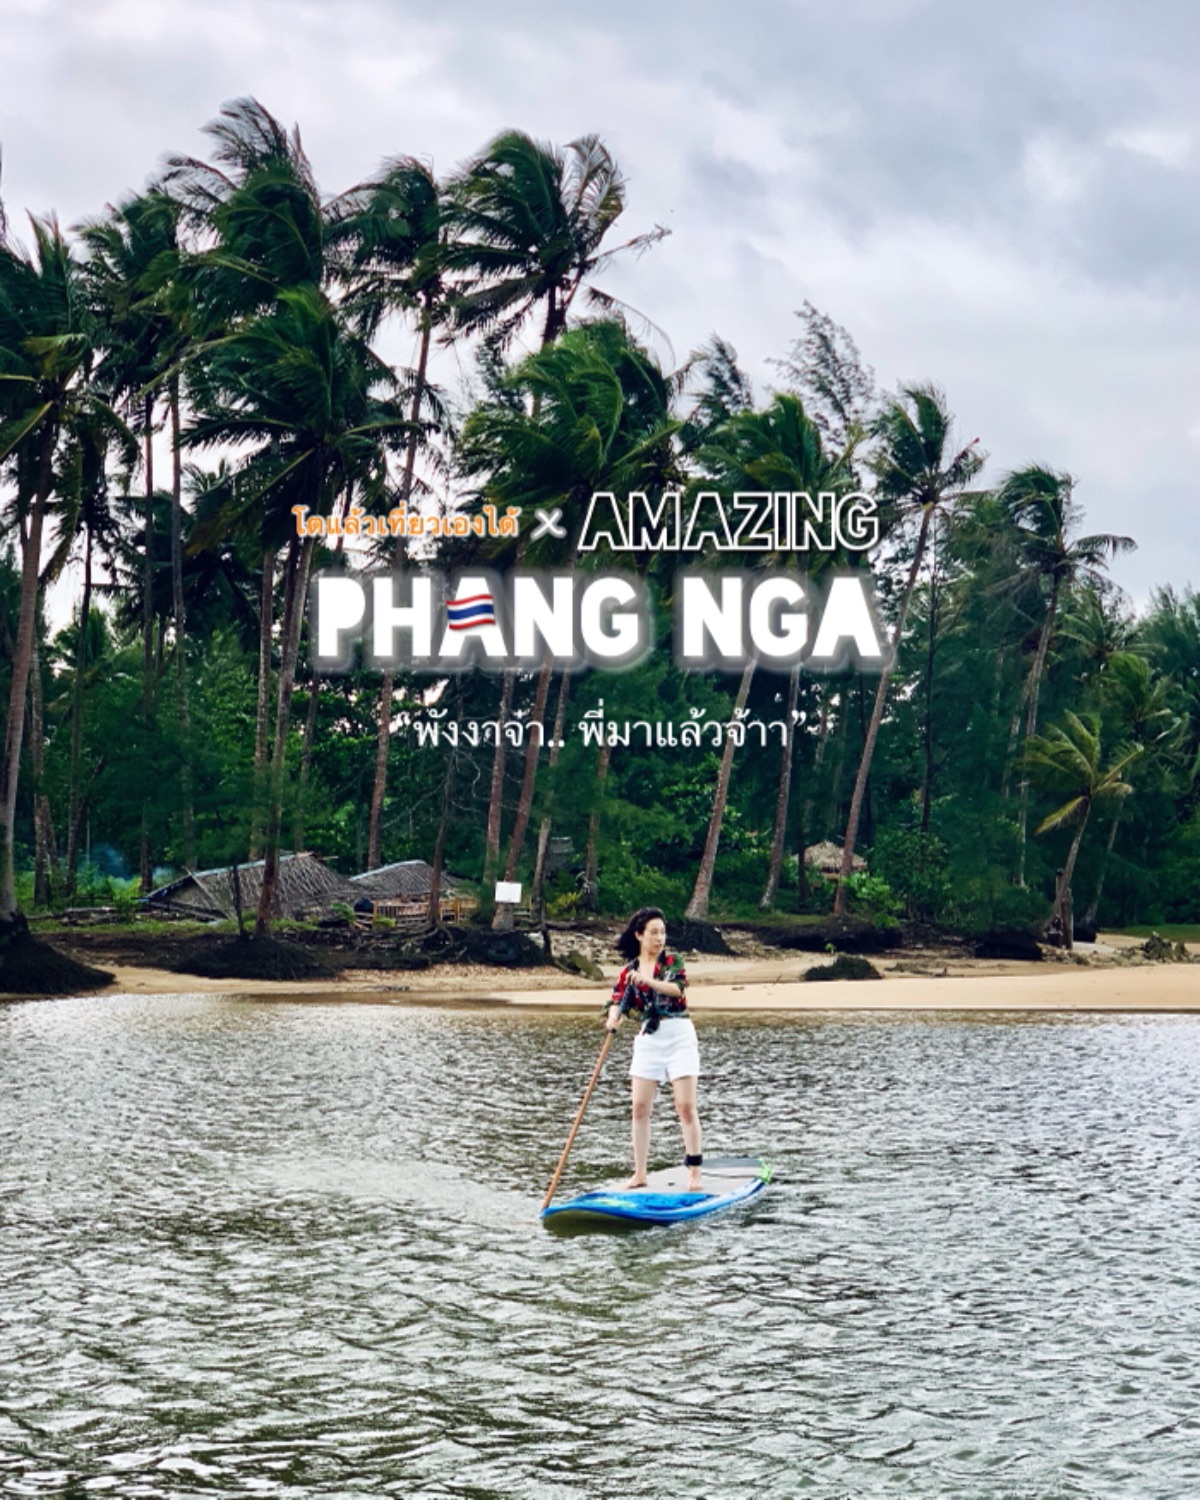 Amazing Phang Nga.. เที่ยวพังงา 3วัน #1 เทวาศรม เขาหลัก Devasom Khao Lak beach resort & villas by โตแล้วเที่ยวเองได้ - Pantip